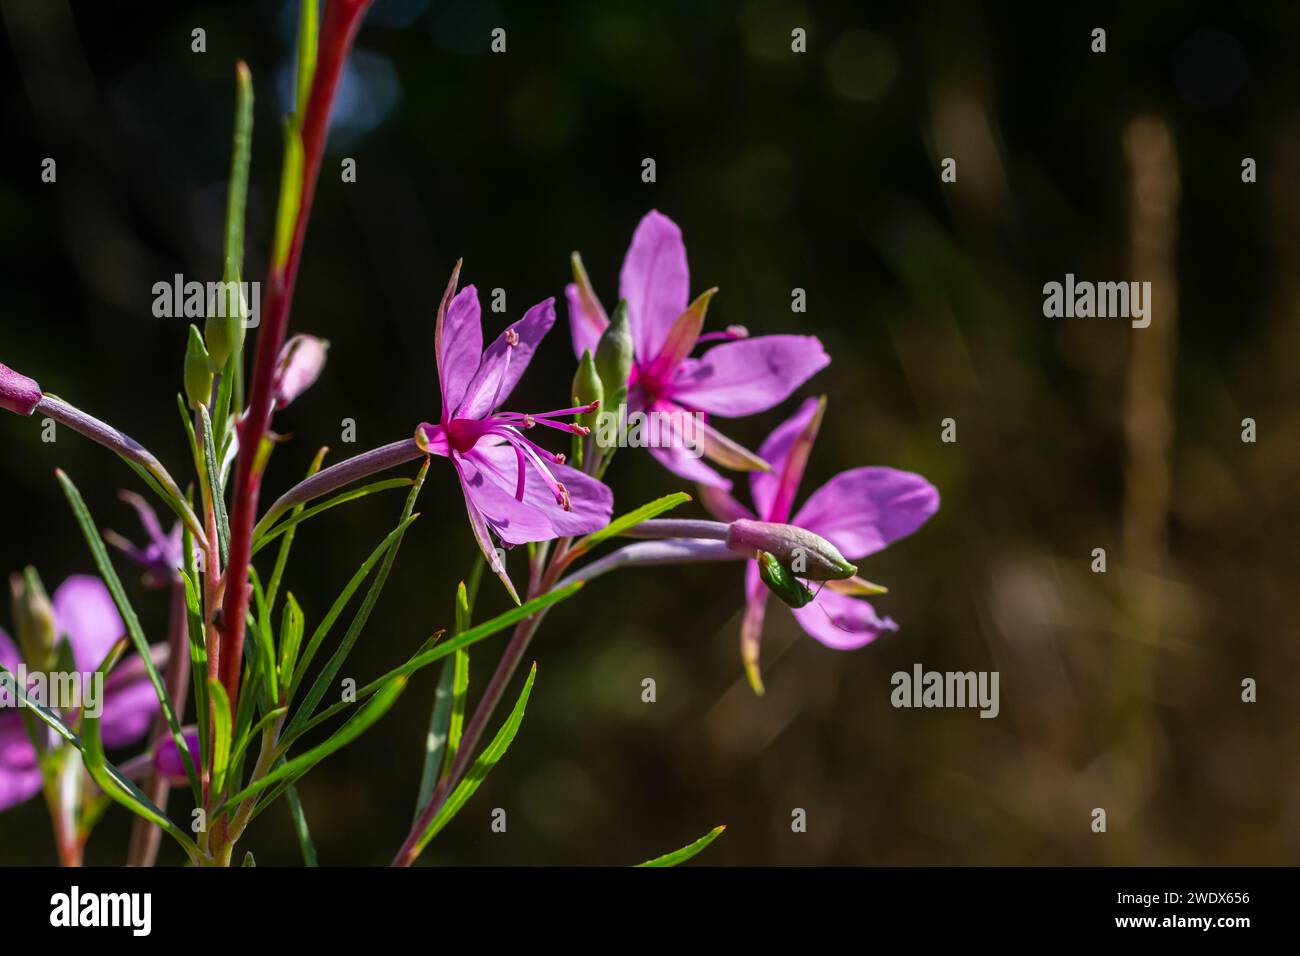 Pink Flowering Chamerion Dodonaei Alpine Willowherb Plant. Stock Photo